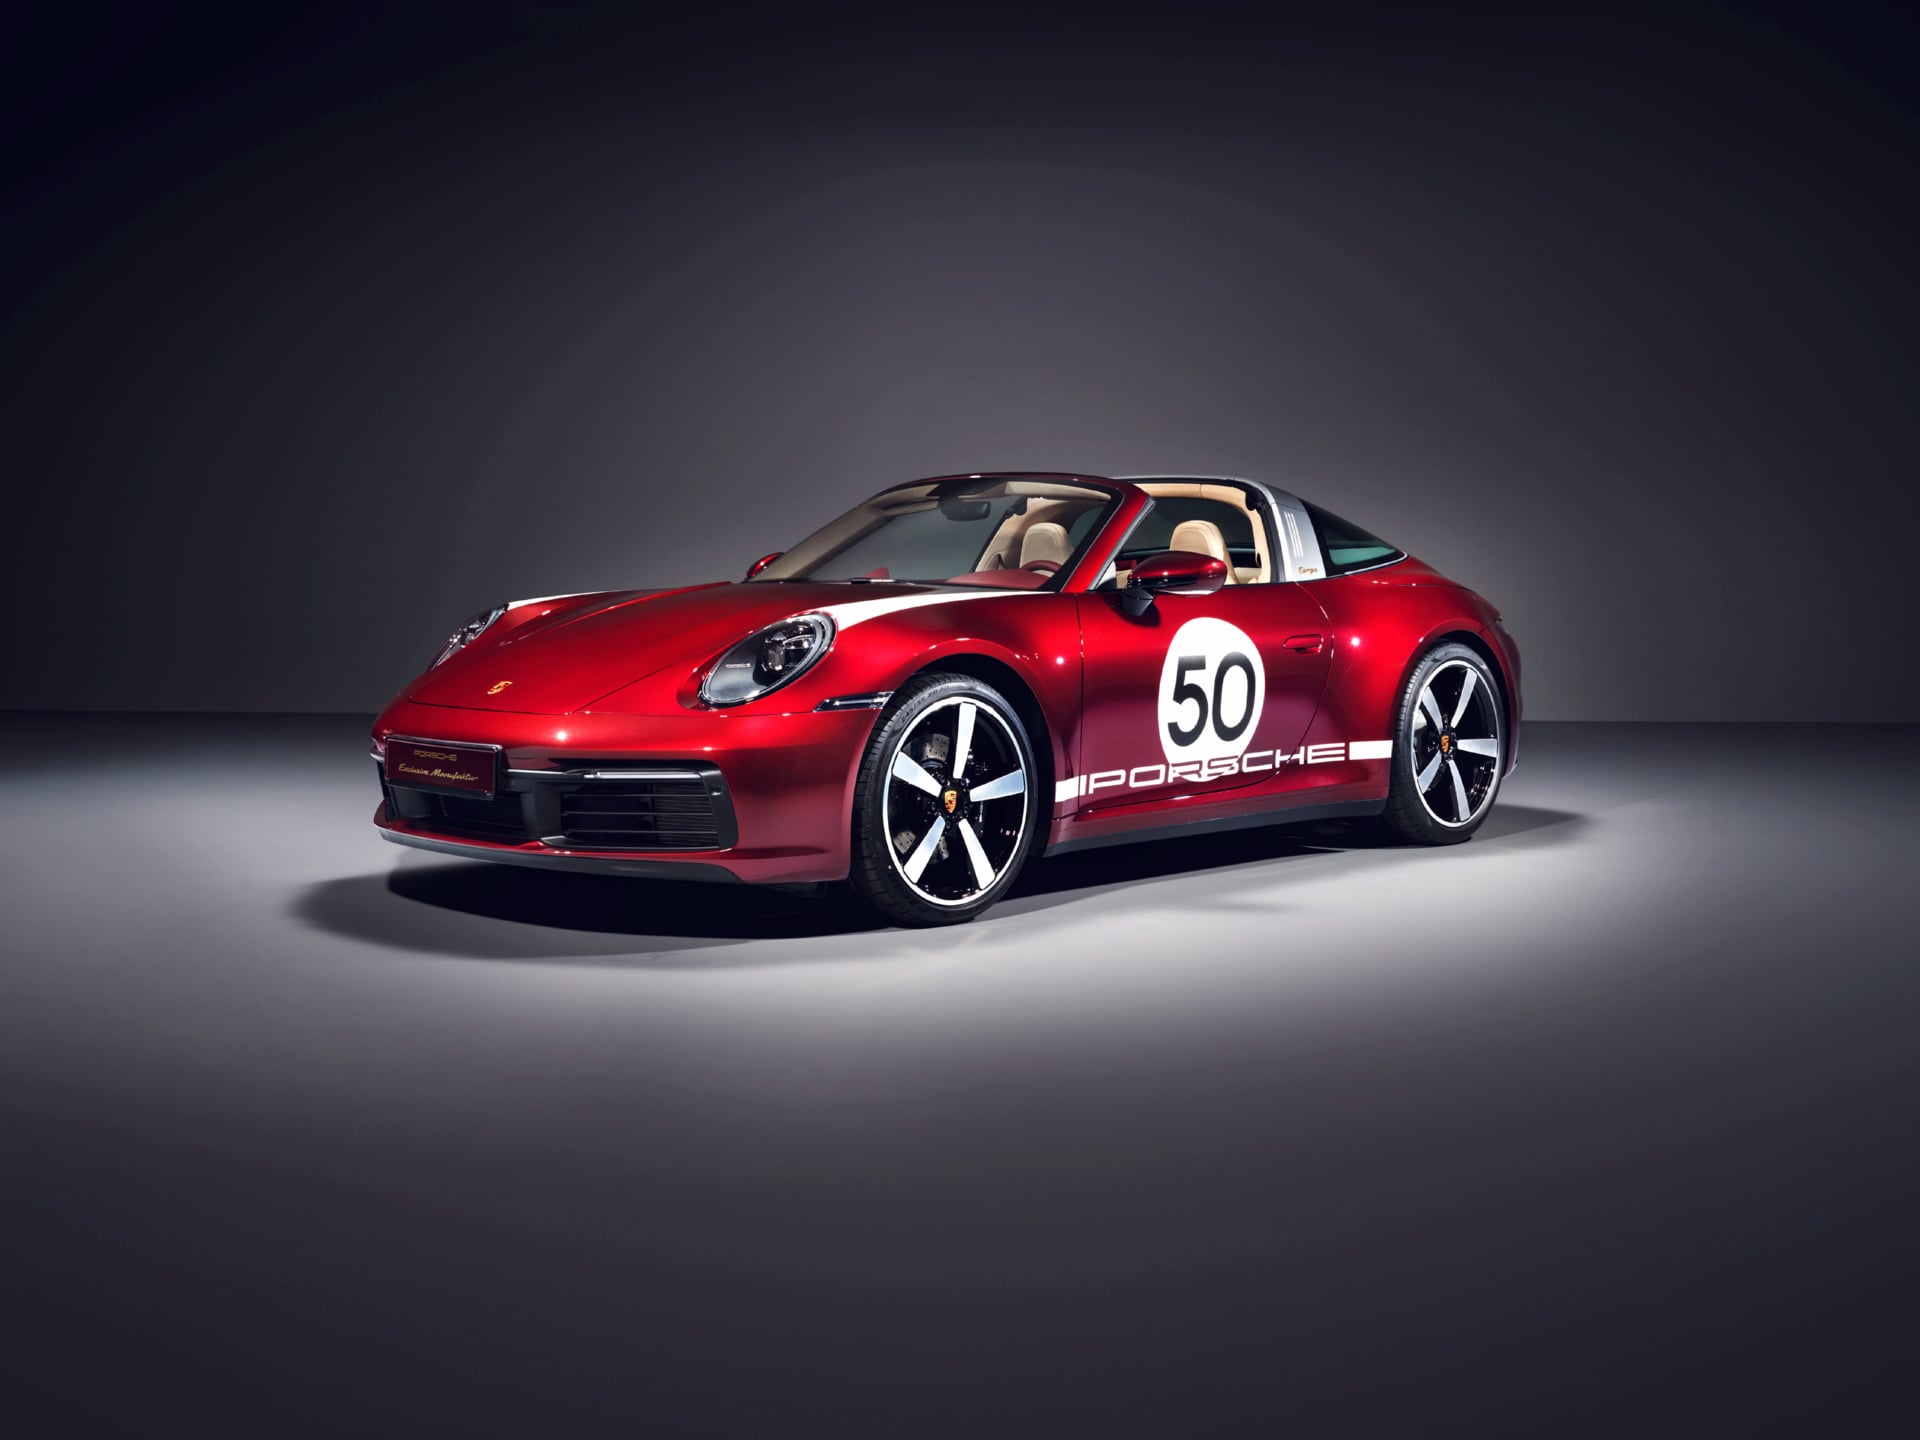 Porsche 911 Targa 4S at 2048 x 2048 iPad size wallpapers HD quality